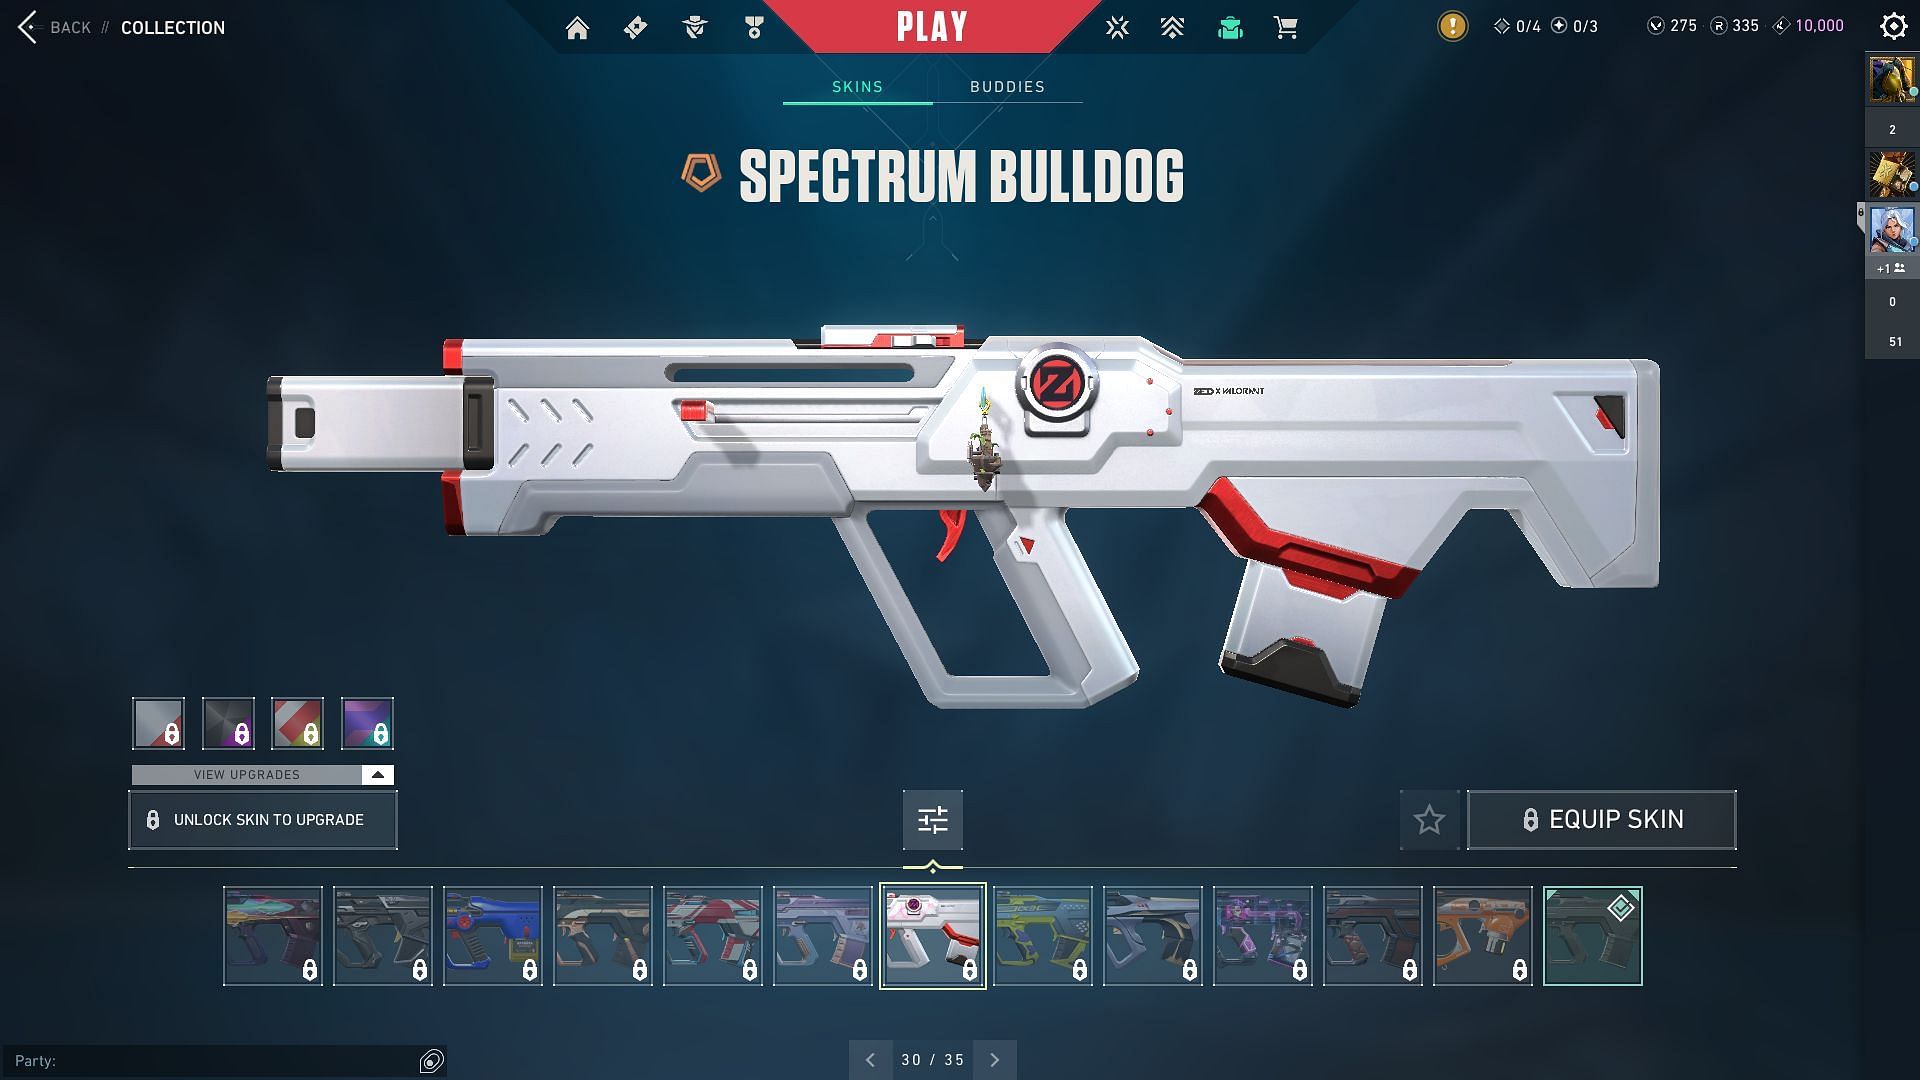 Spectrum Bulldog (Image via Sportskeeda and Riot Games)